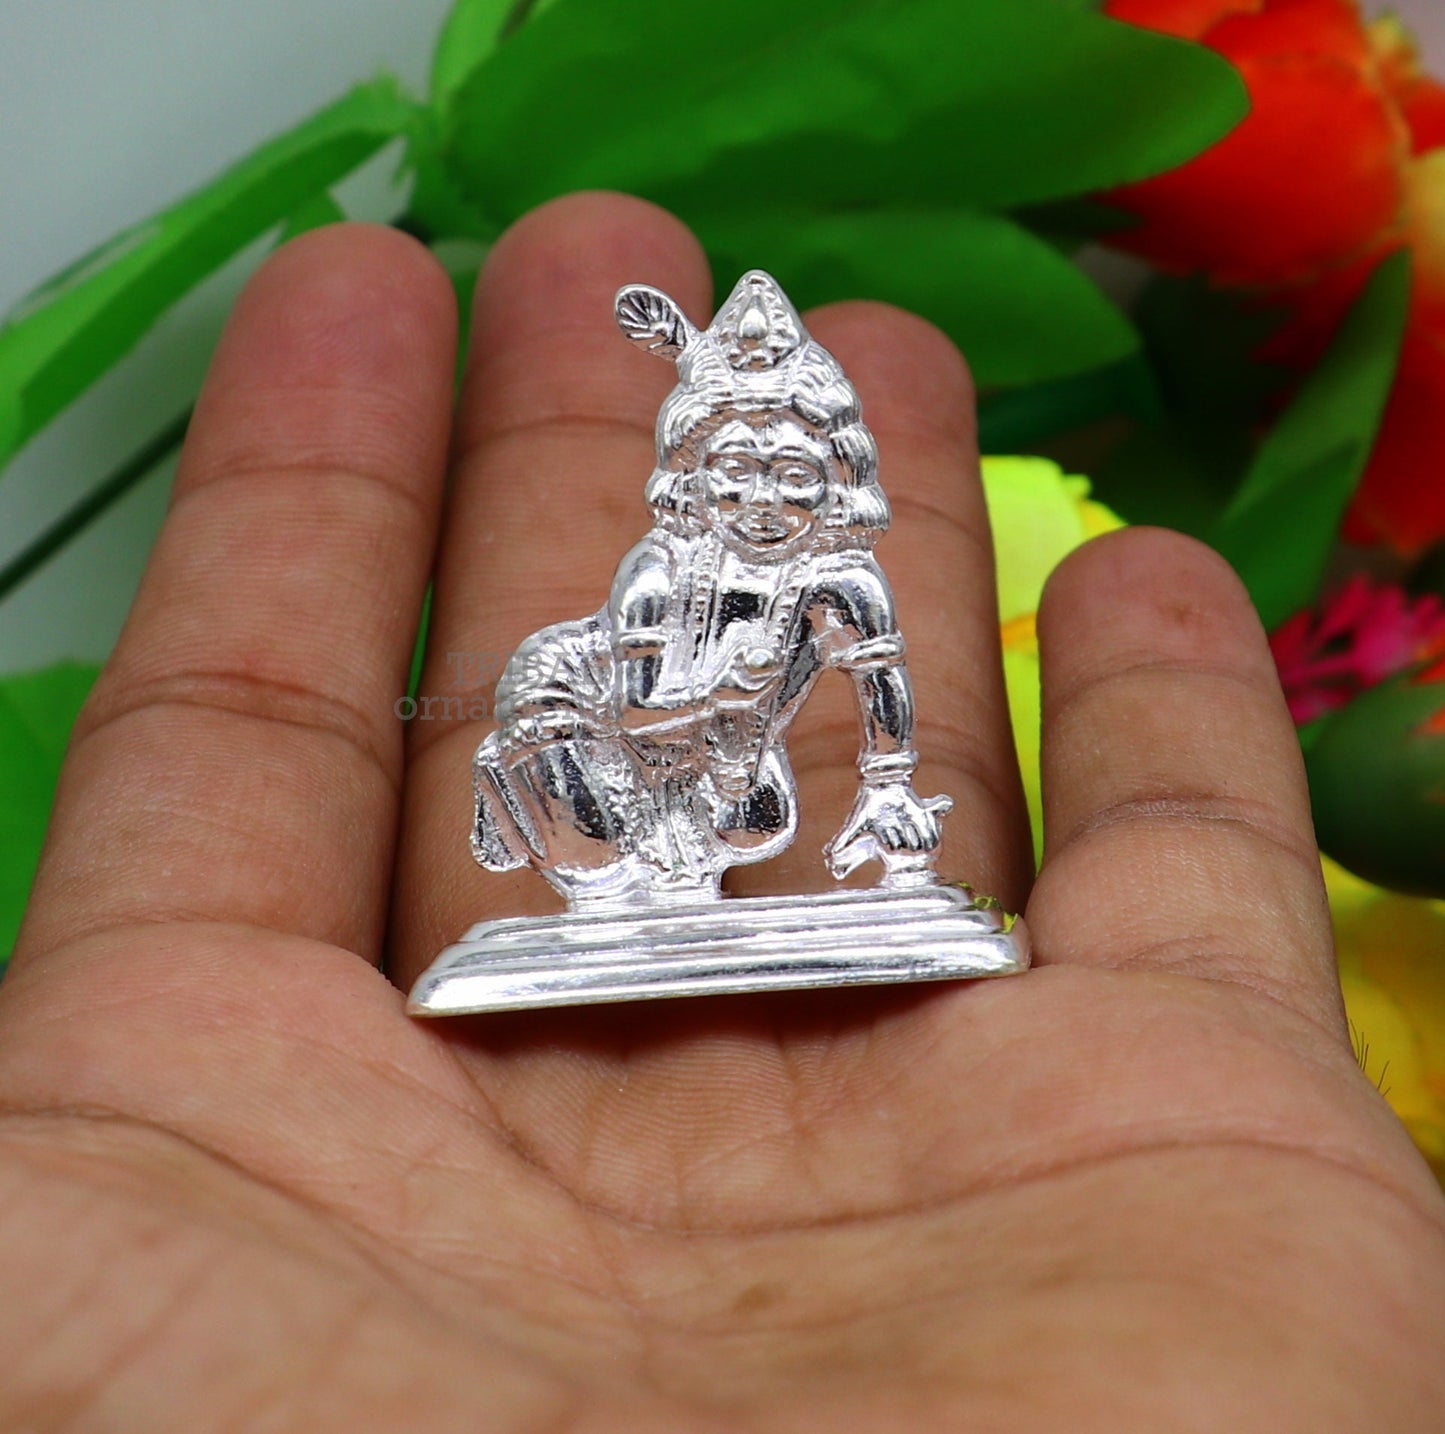 Solid silver handmade design indian idol little krishna, Ladu Gopal,crawling Krishna statue sculpture home temple puja art, utensils su736 - TRIBAL ORNAMENTS